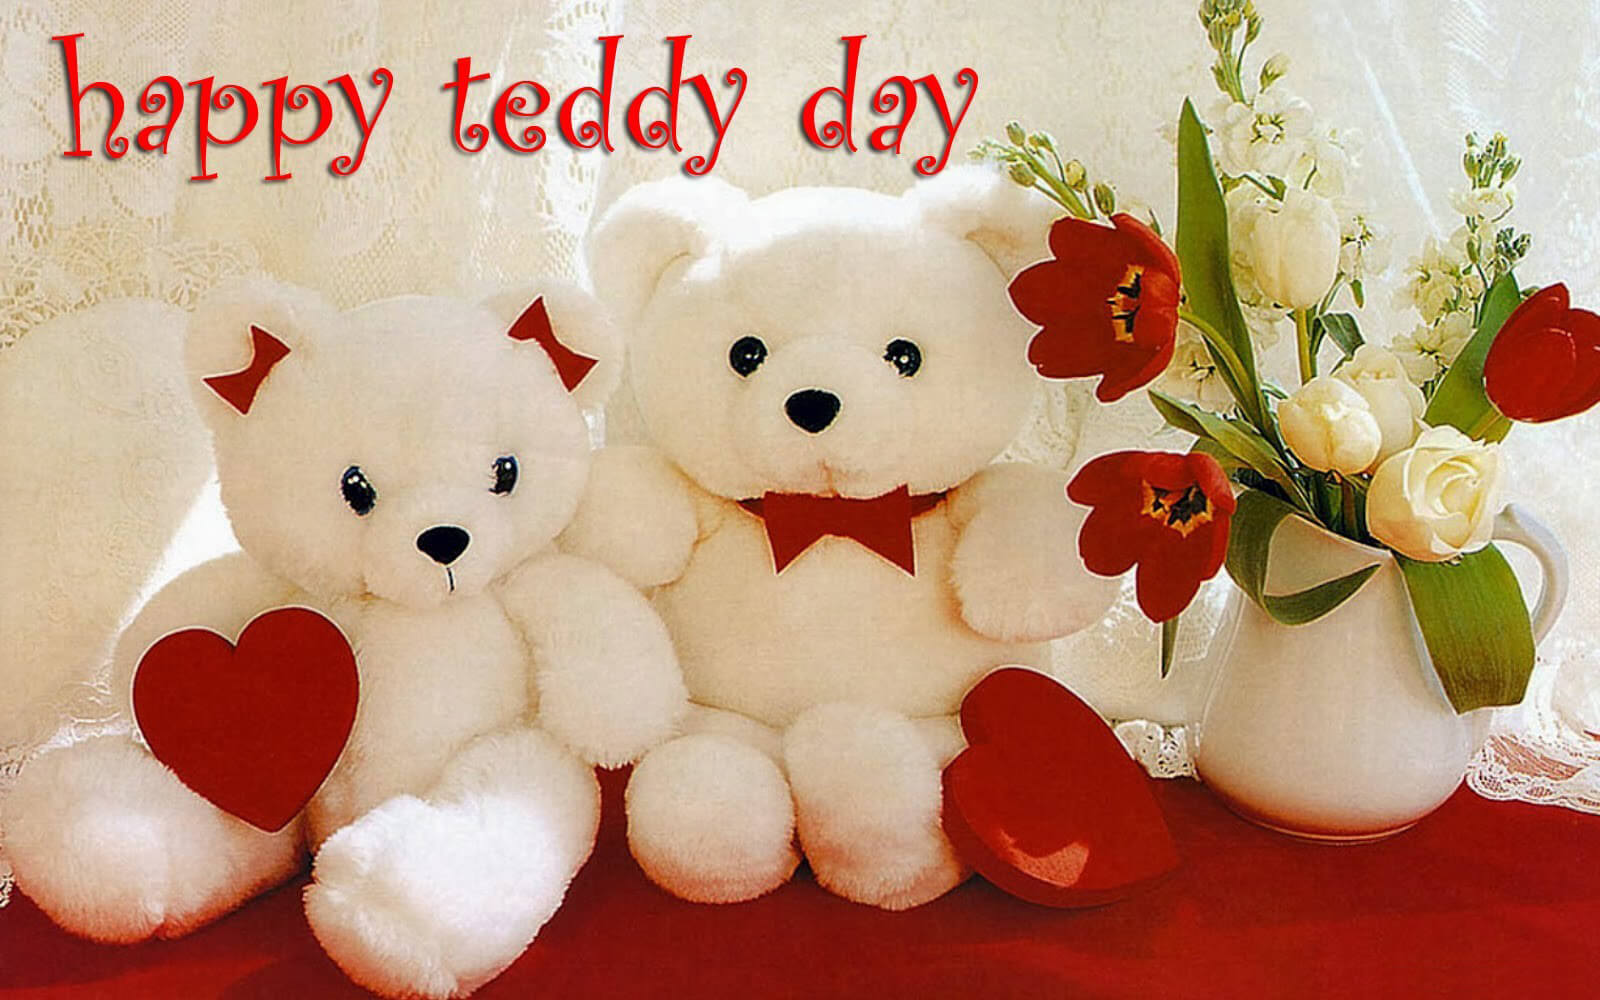 Happy Teddy Day Love Image Valentine Day